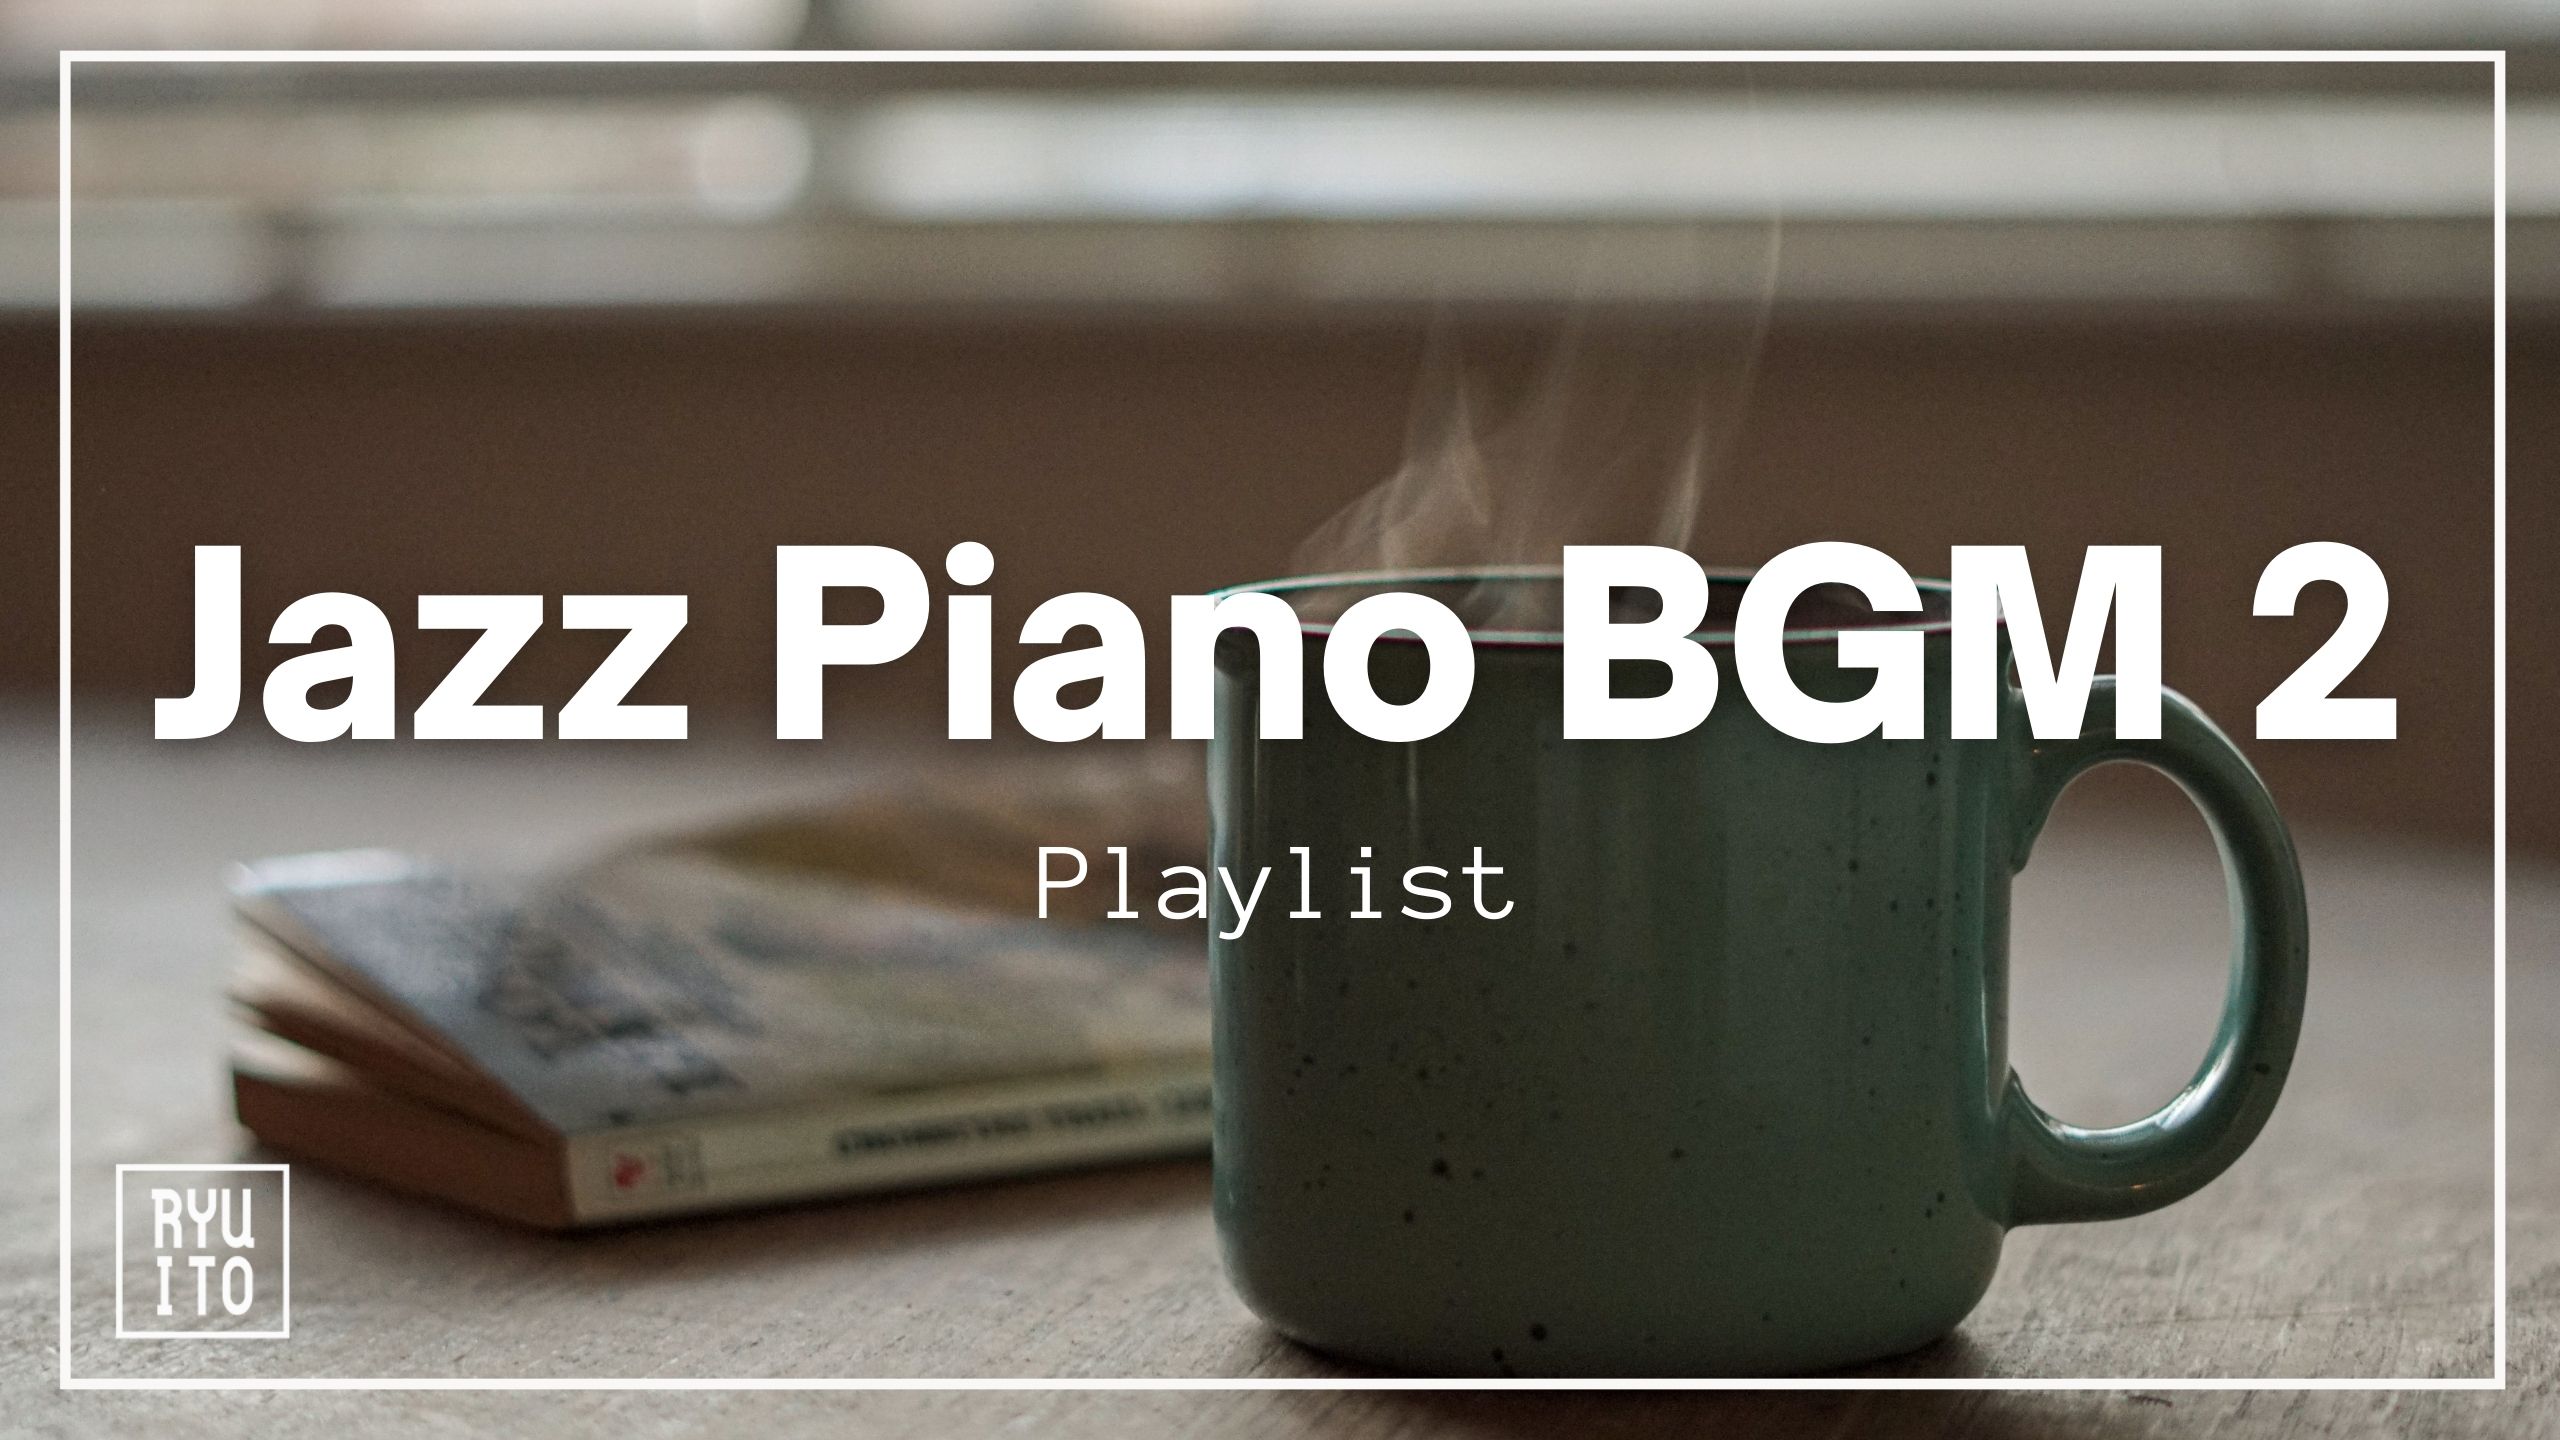 Jazz Piano BGM 2